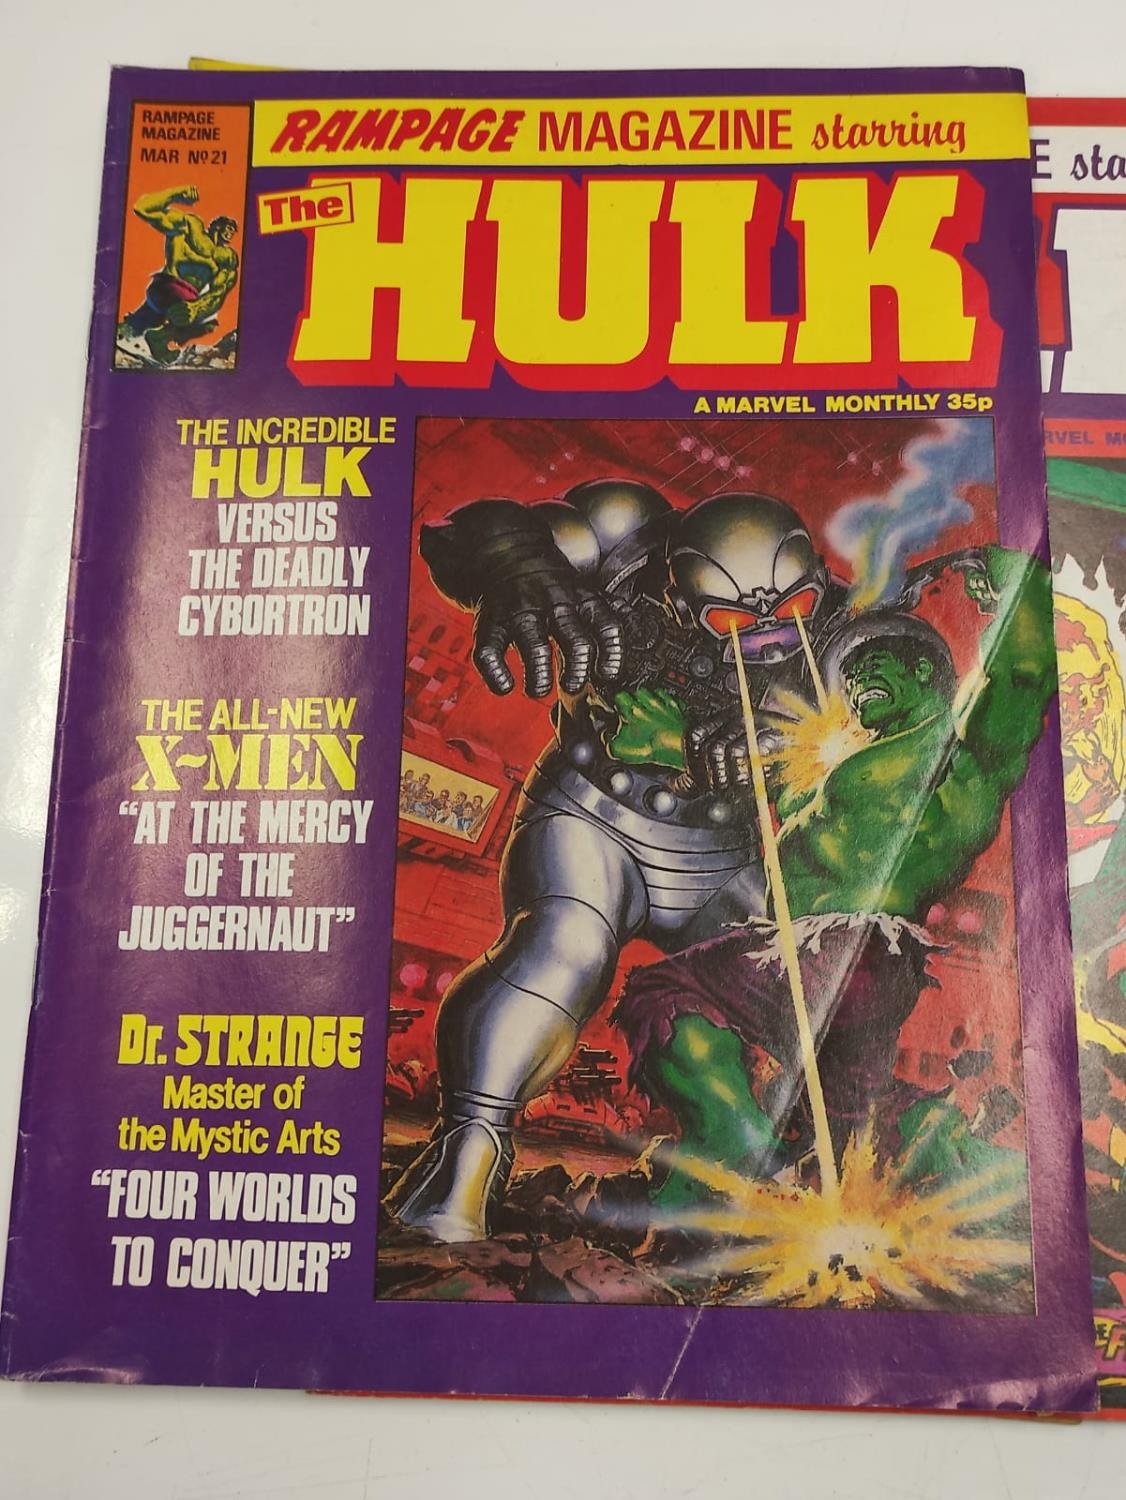 7 editions of Vintage Ramgage Magazines 'The Hulk'.